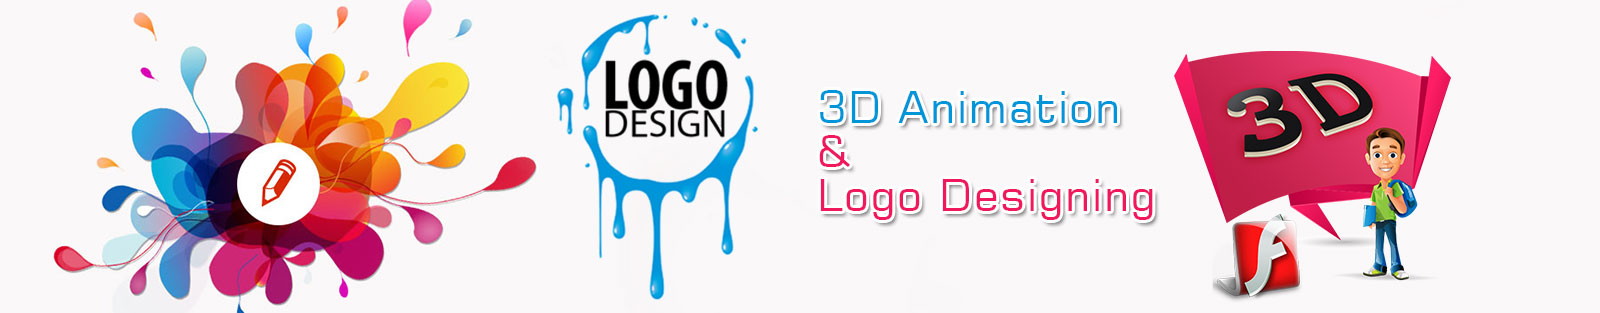 3D animation logo designing services